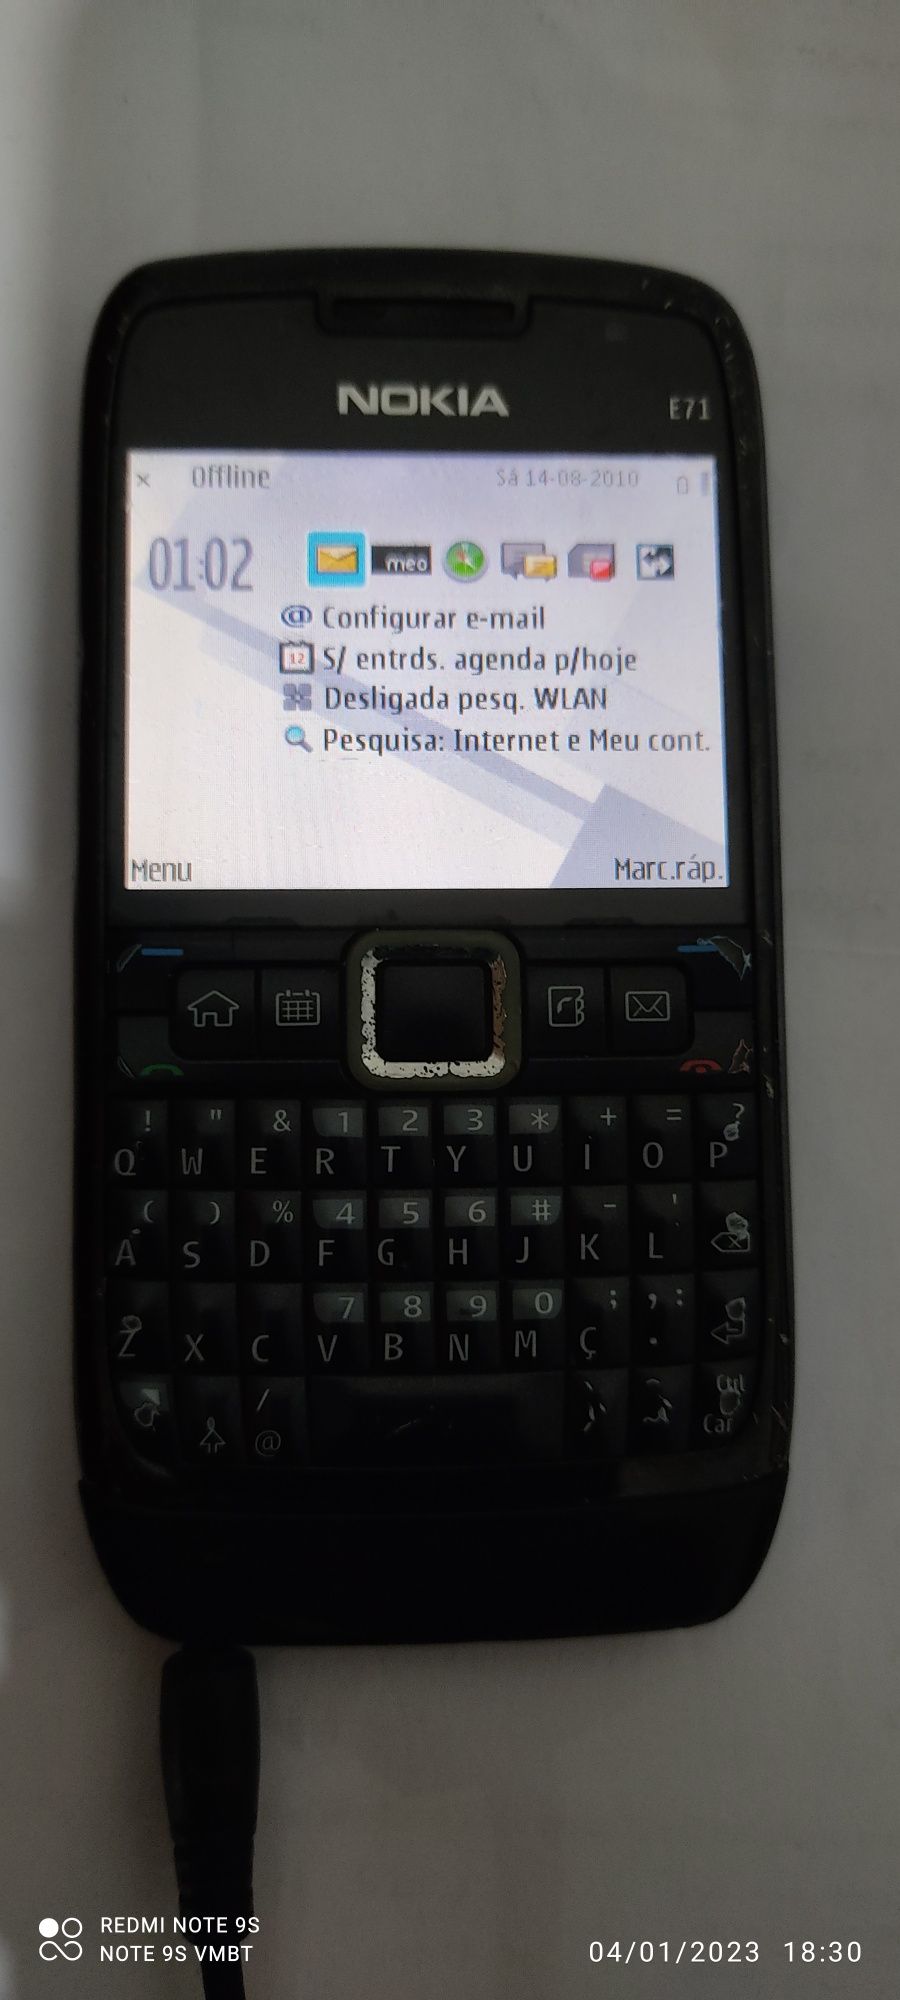 Telemóvel Nokia E71